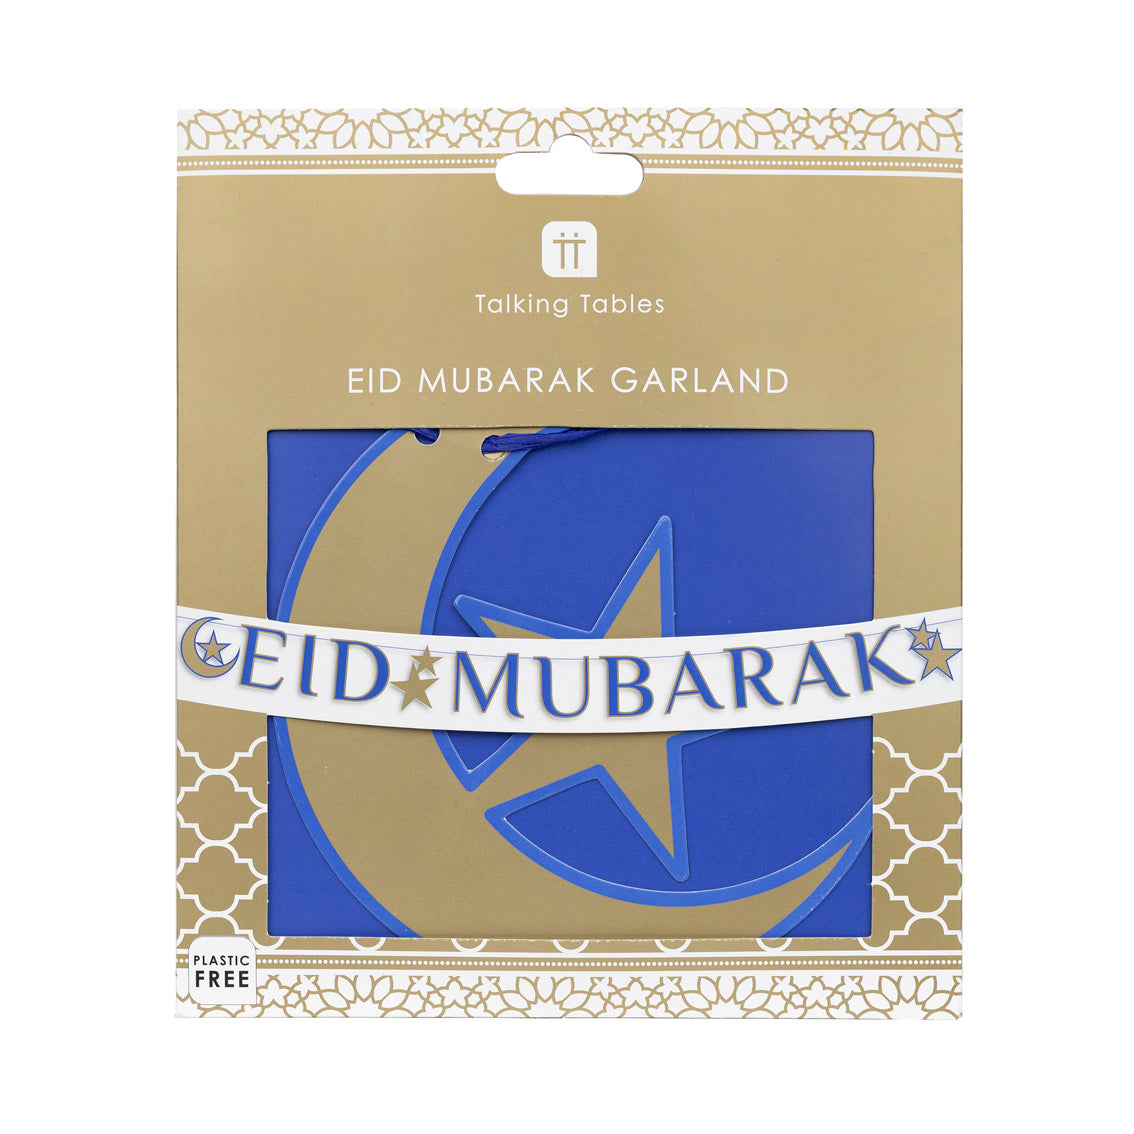 Eid Mubarak Paper Garland 3m in packaging